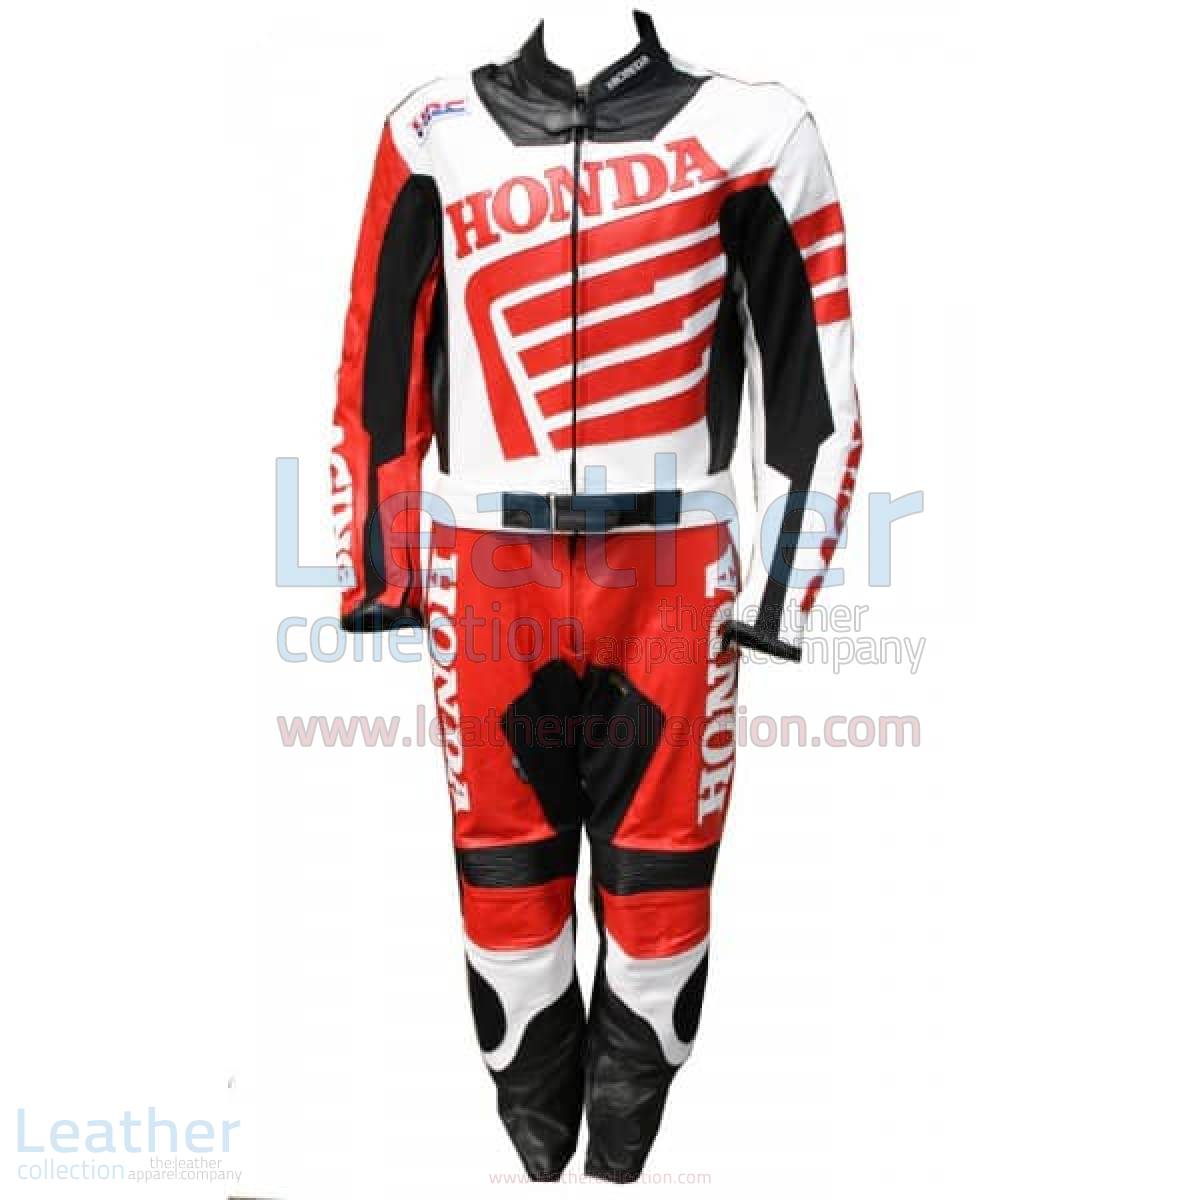 Honda Motorbike Racing Leather Suit